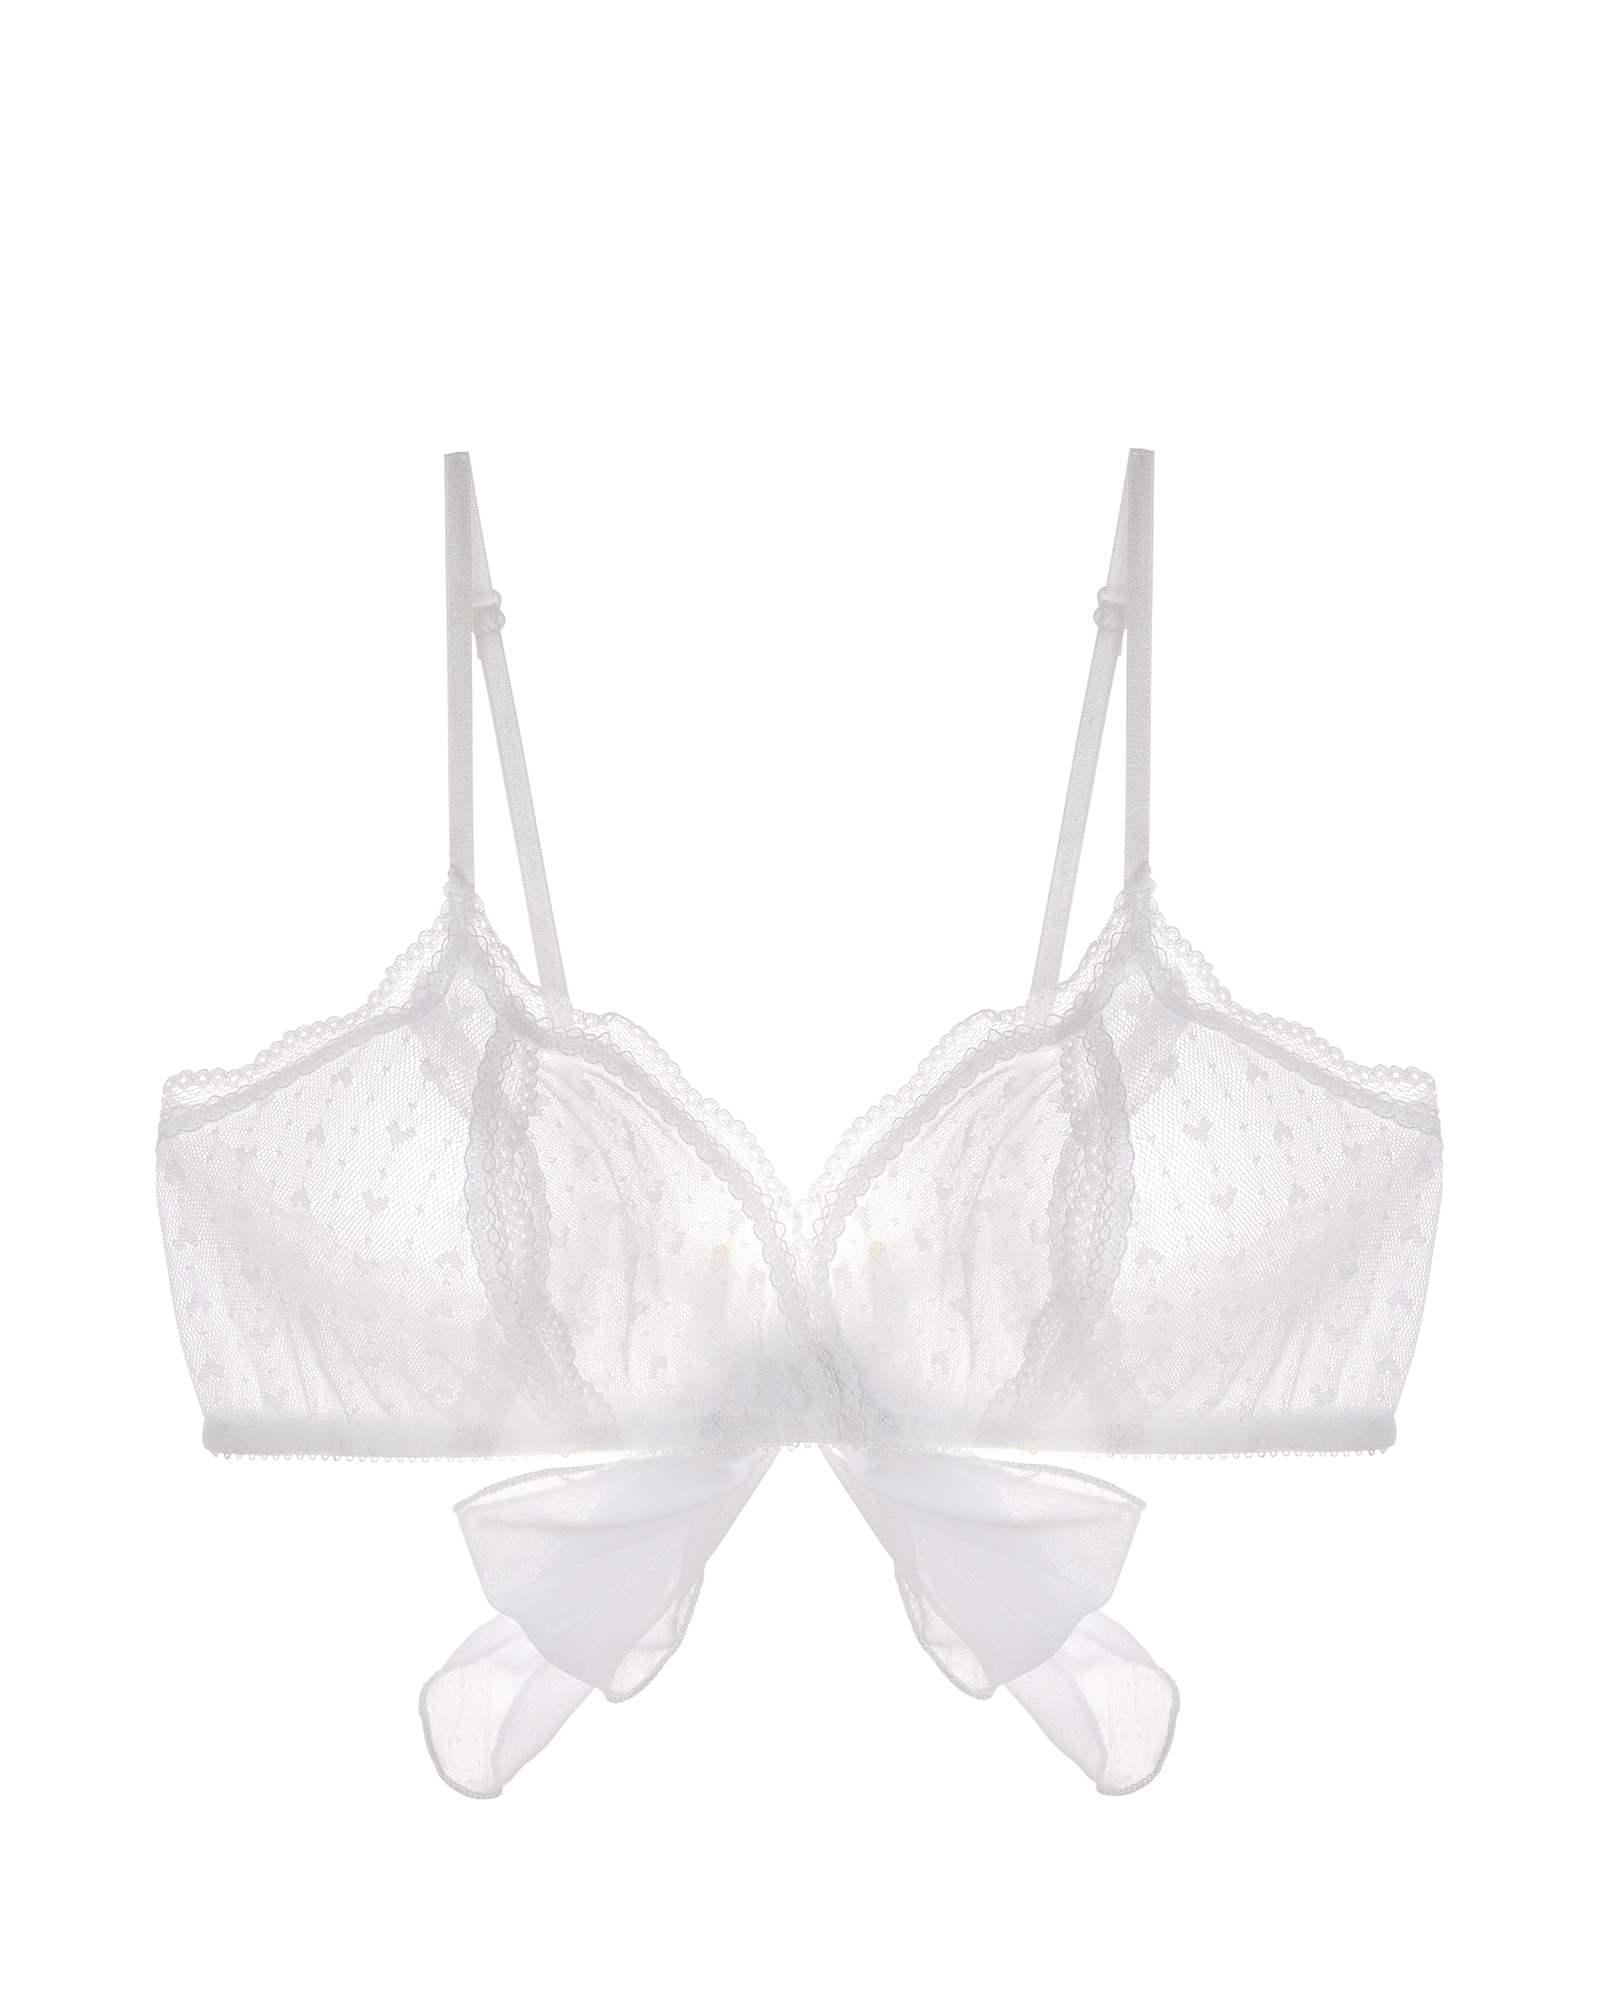 ONLY HEARTS - organic cotton underwear - Gigi's - Toronto Lingerie